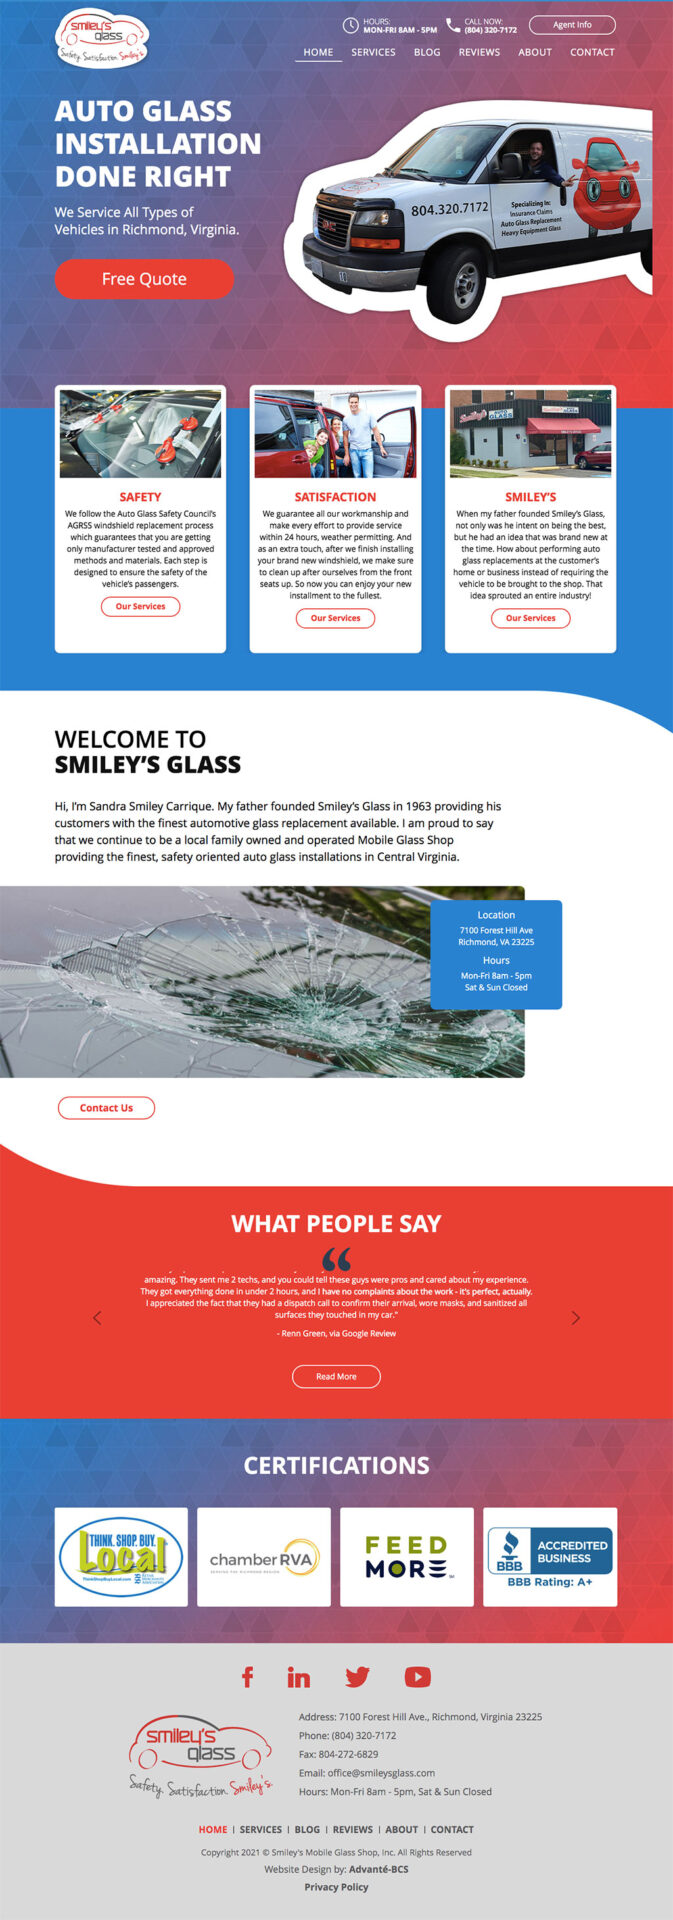 Website design auto glass company Smiley’s Glass